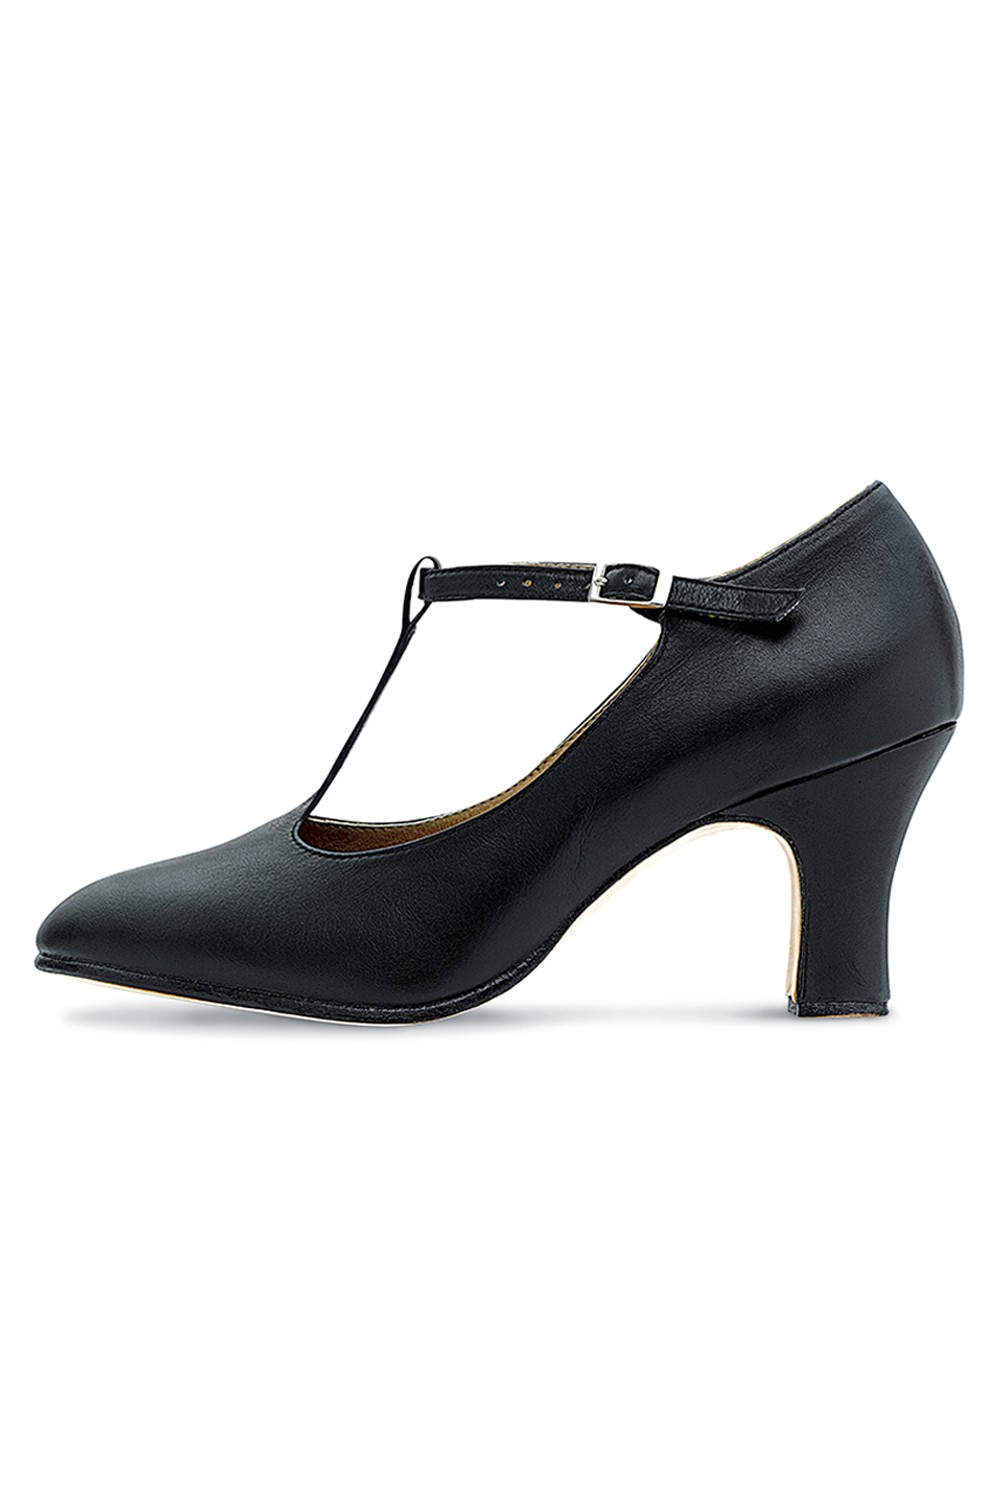 Bloch® Innovative Dance Shoes For Women - Bloch® US Store